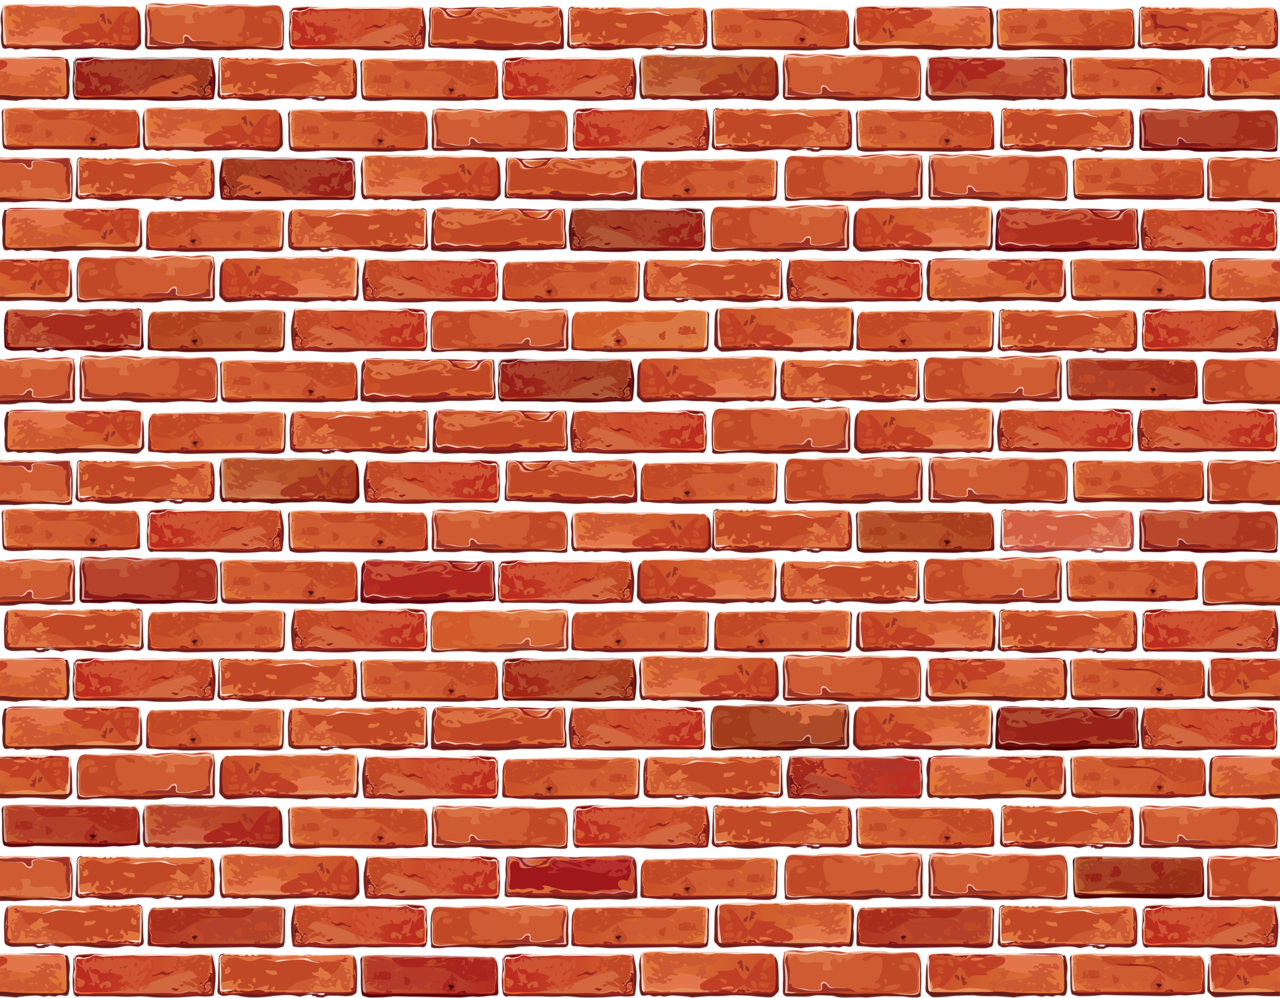 Brickwalls PNG Image File